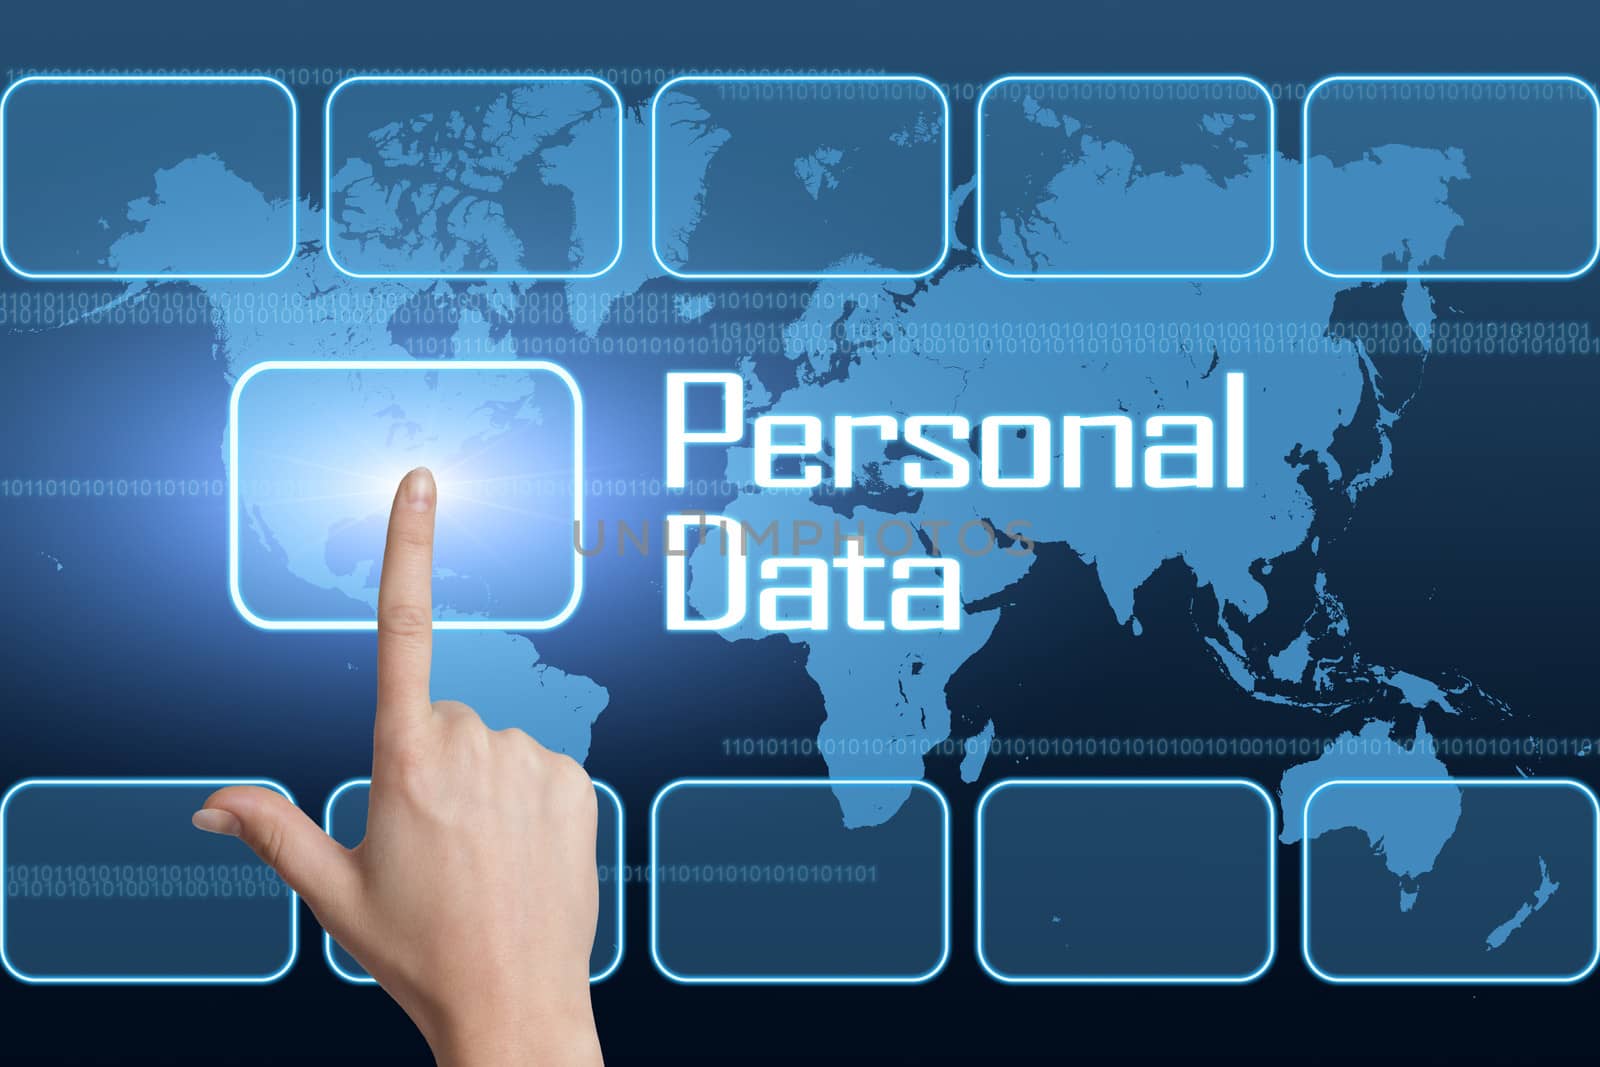 Personal Data by Mazirama